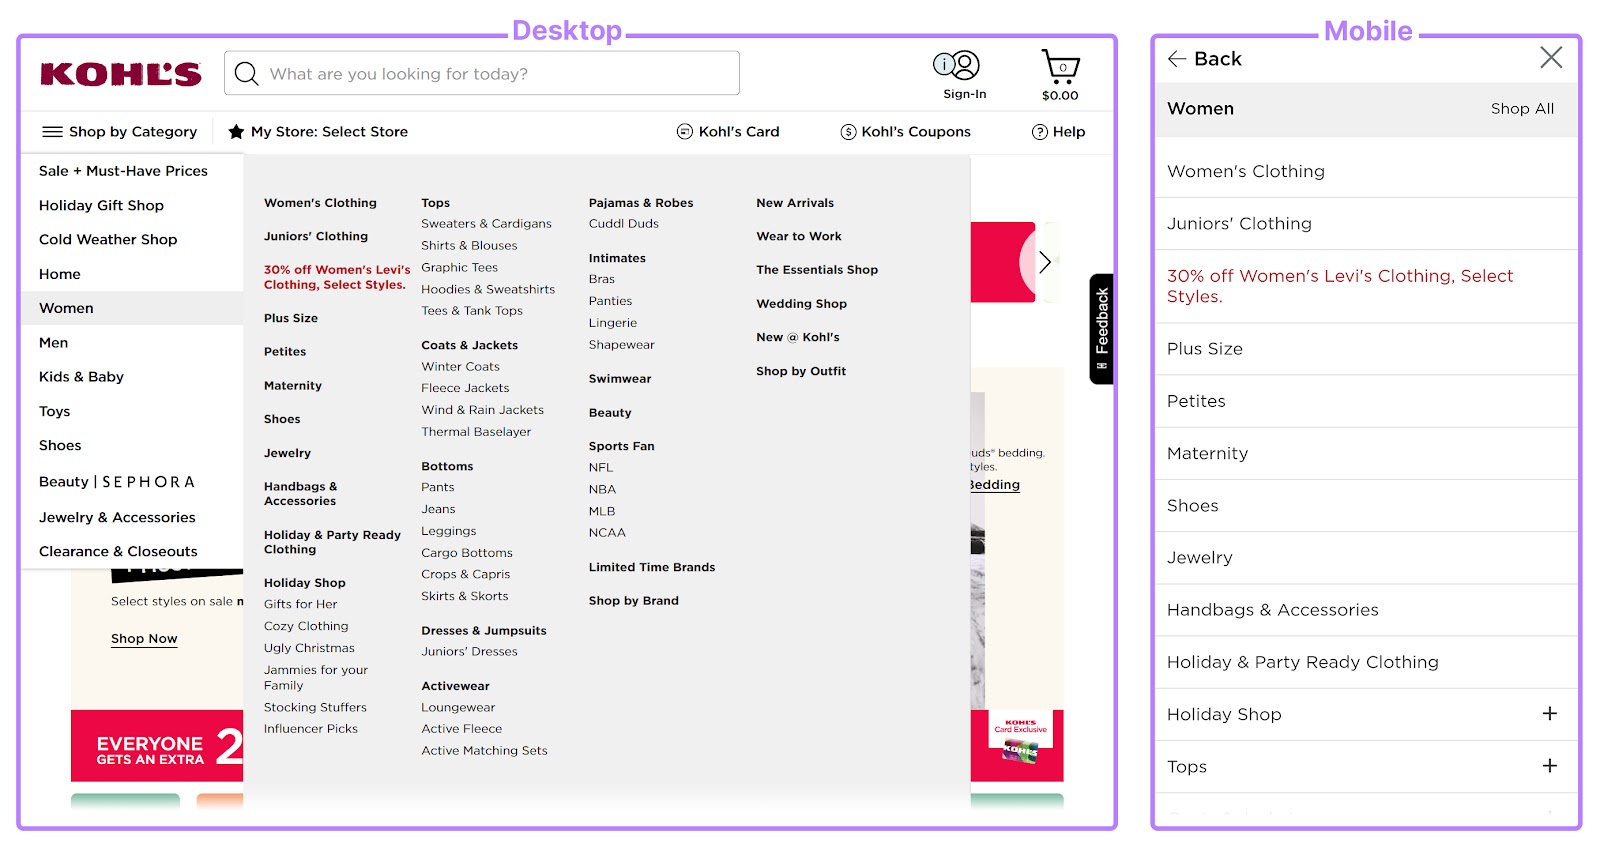 Kohl’s desktop menu (left) and mobile menu (right)